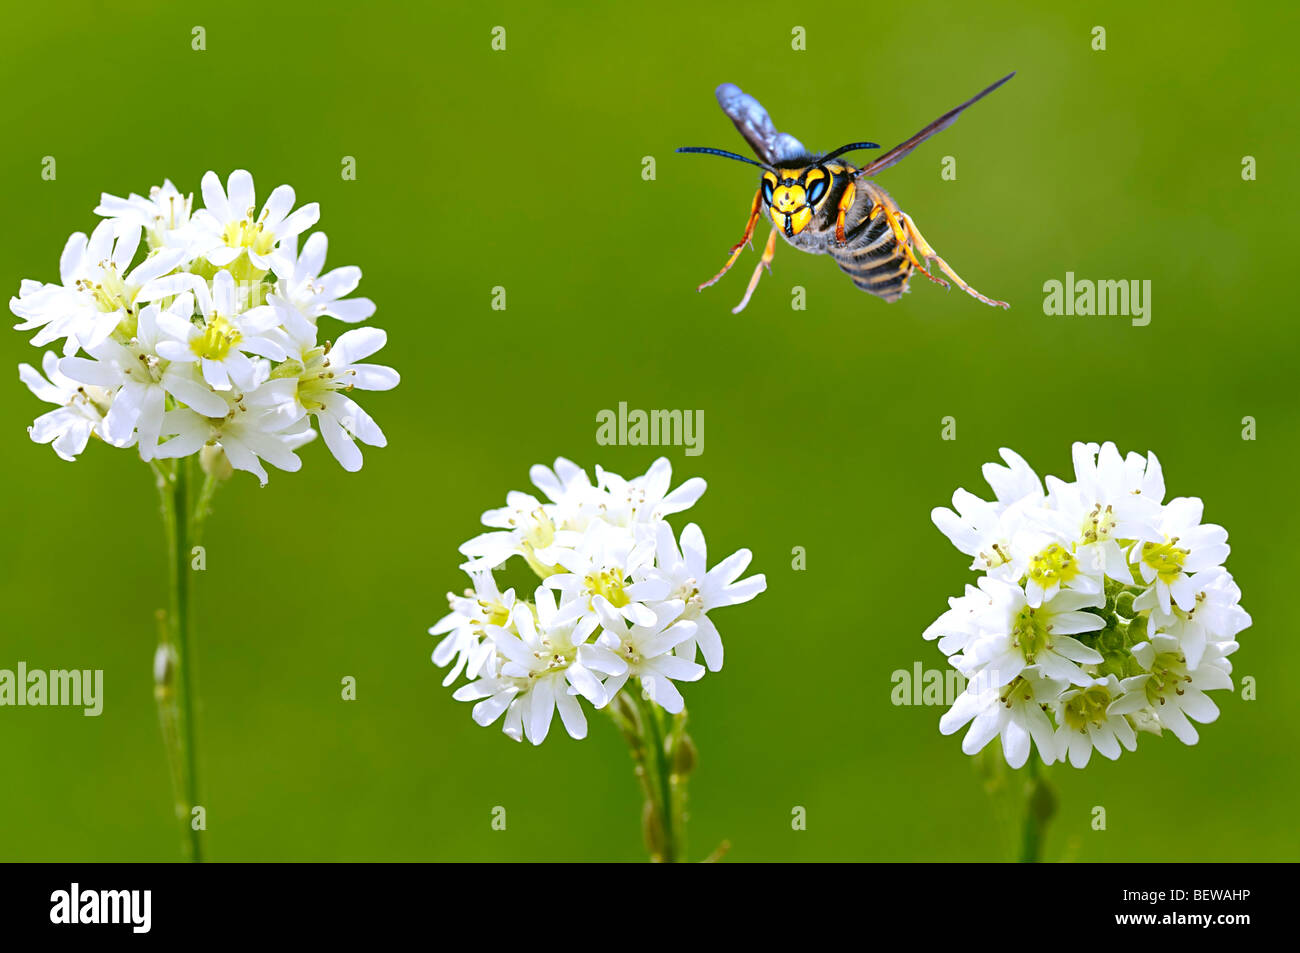 Dolichovespula sylvestris flying between flowers, full shot Stock Photo